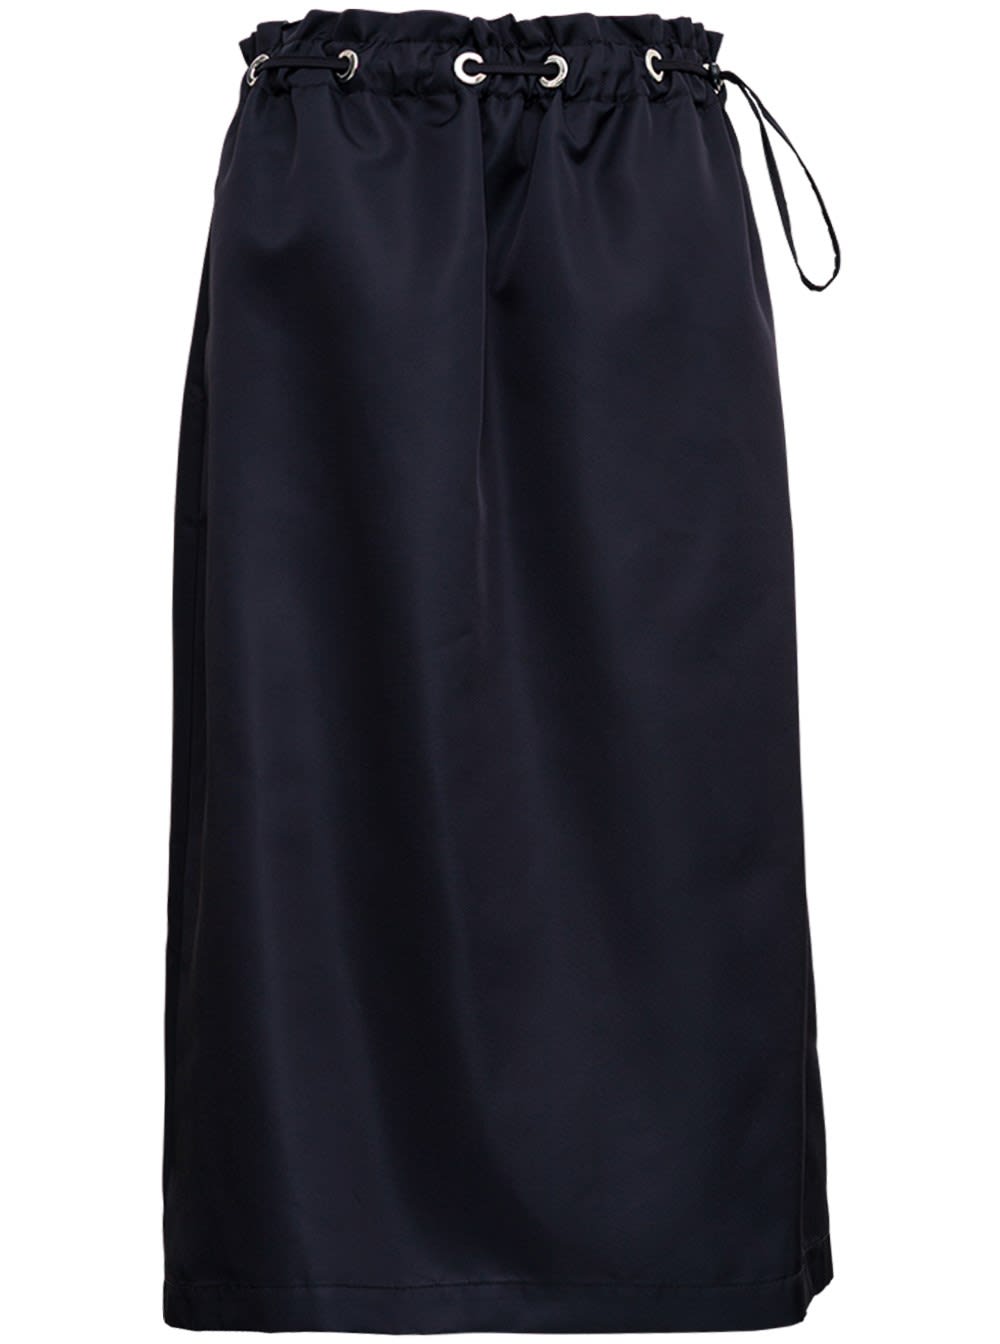 Tessa Black Nylon Skirt With Drawstring